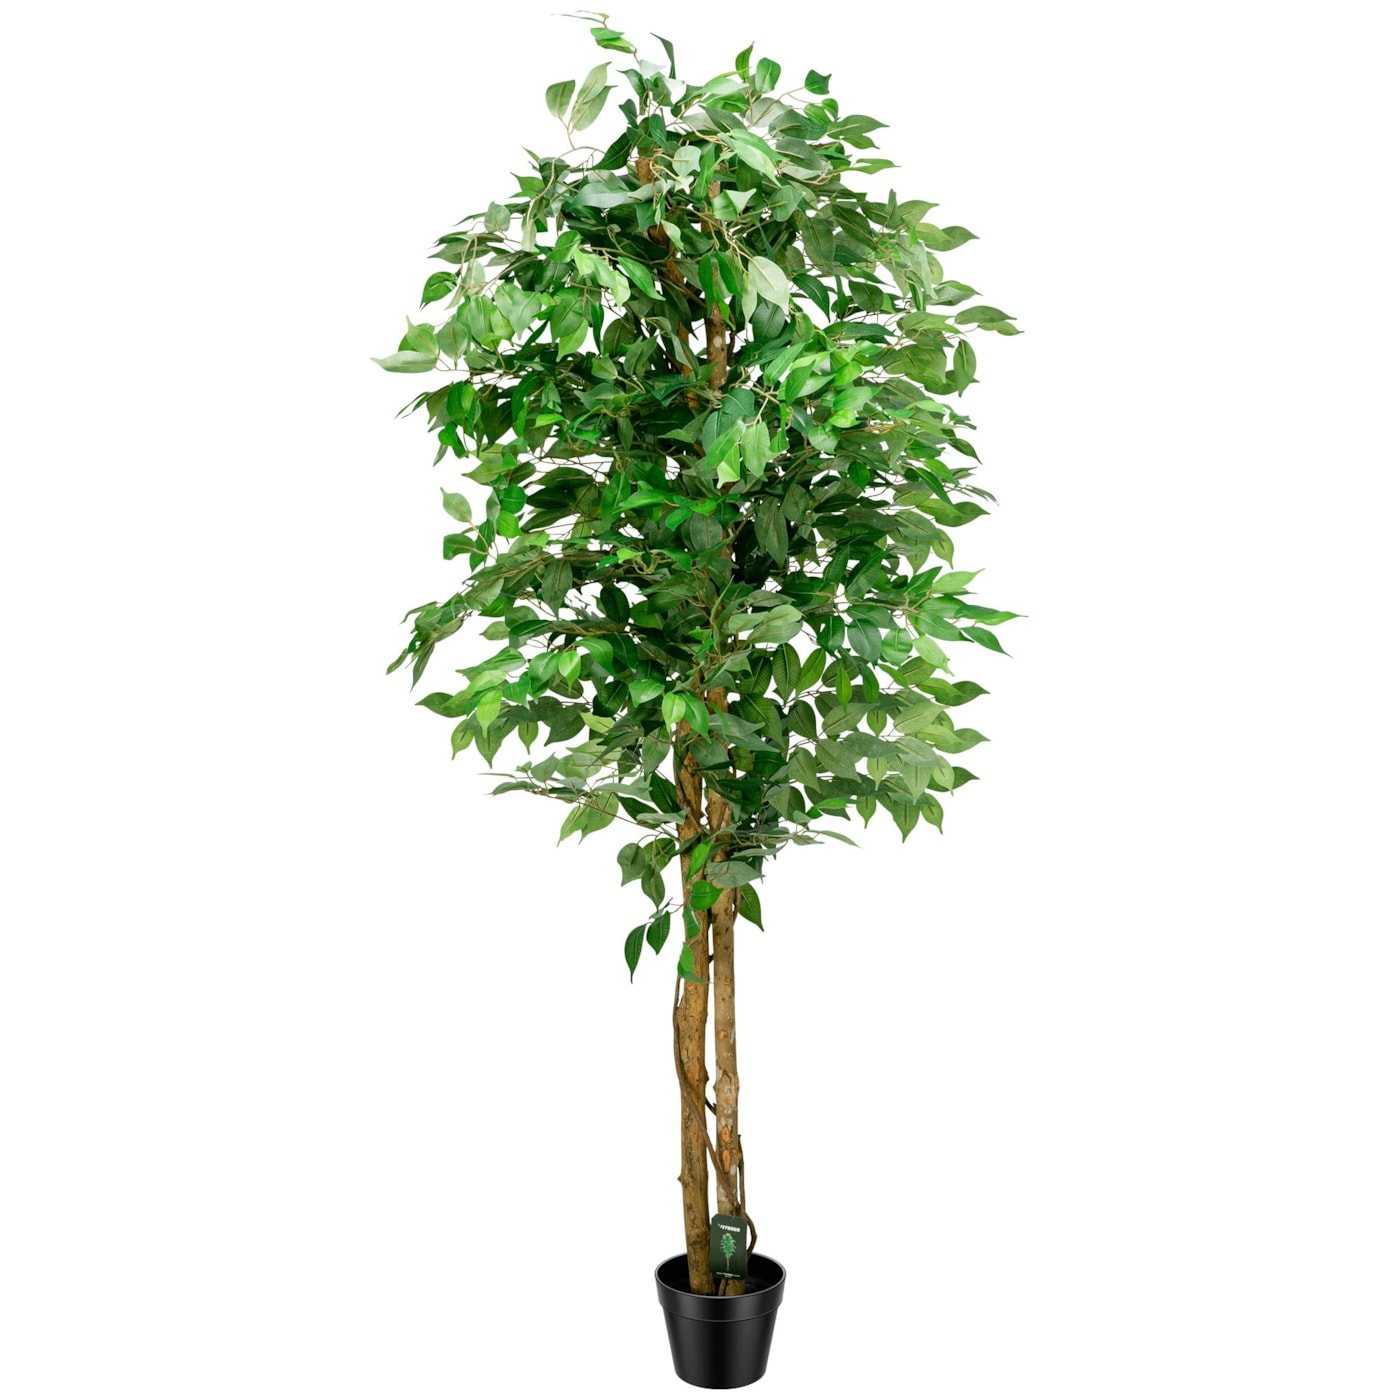 VIVOSUN 6 ft. Artificial Ficus Silk Tree, Artificial Plant Ficus Tree Potted Plant for Indoor Outdoor Decor